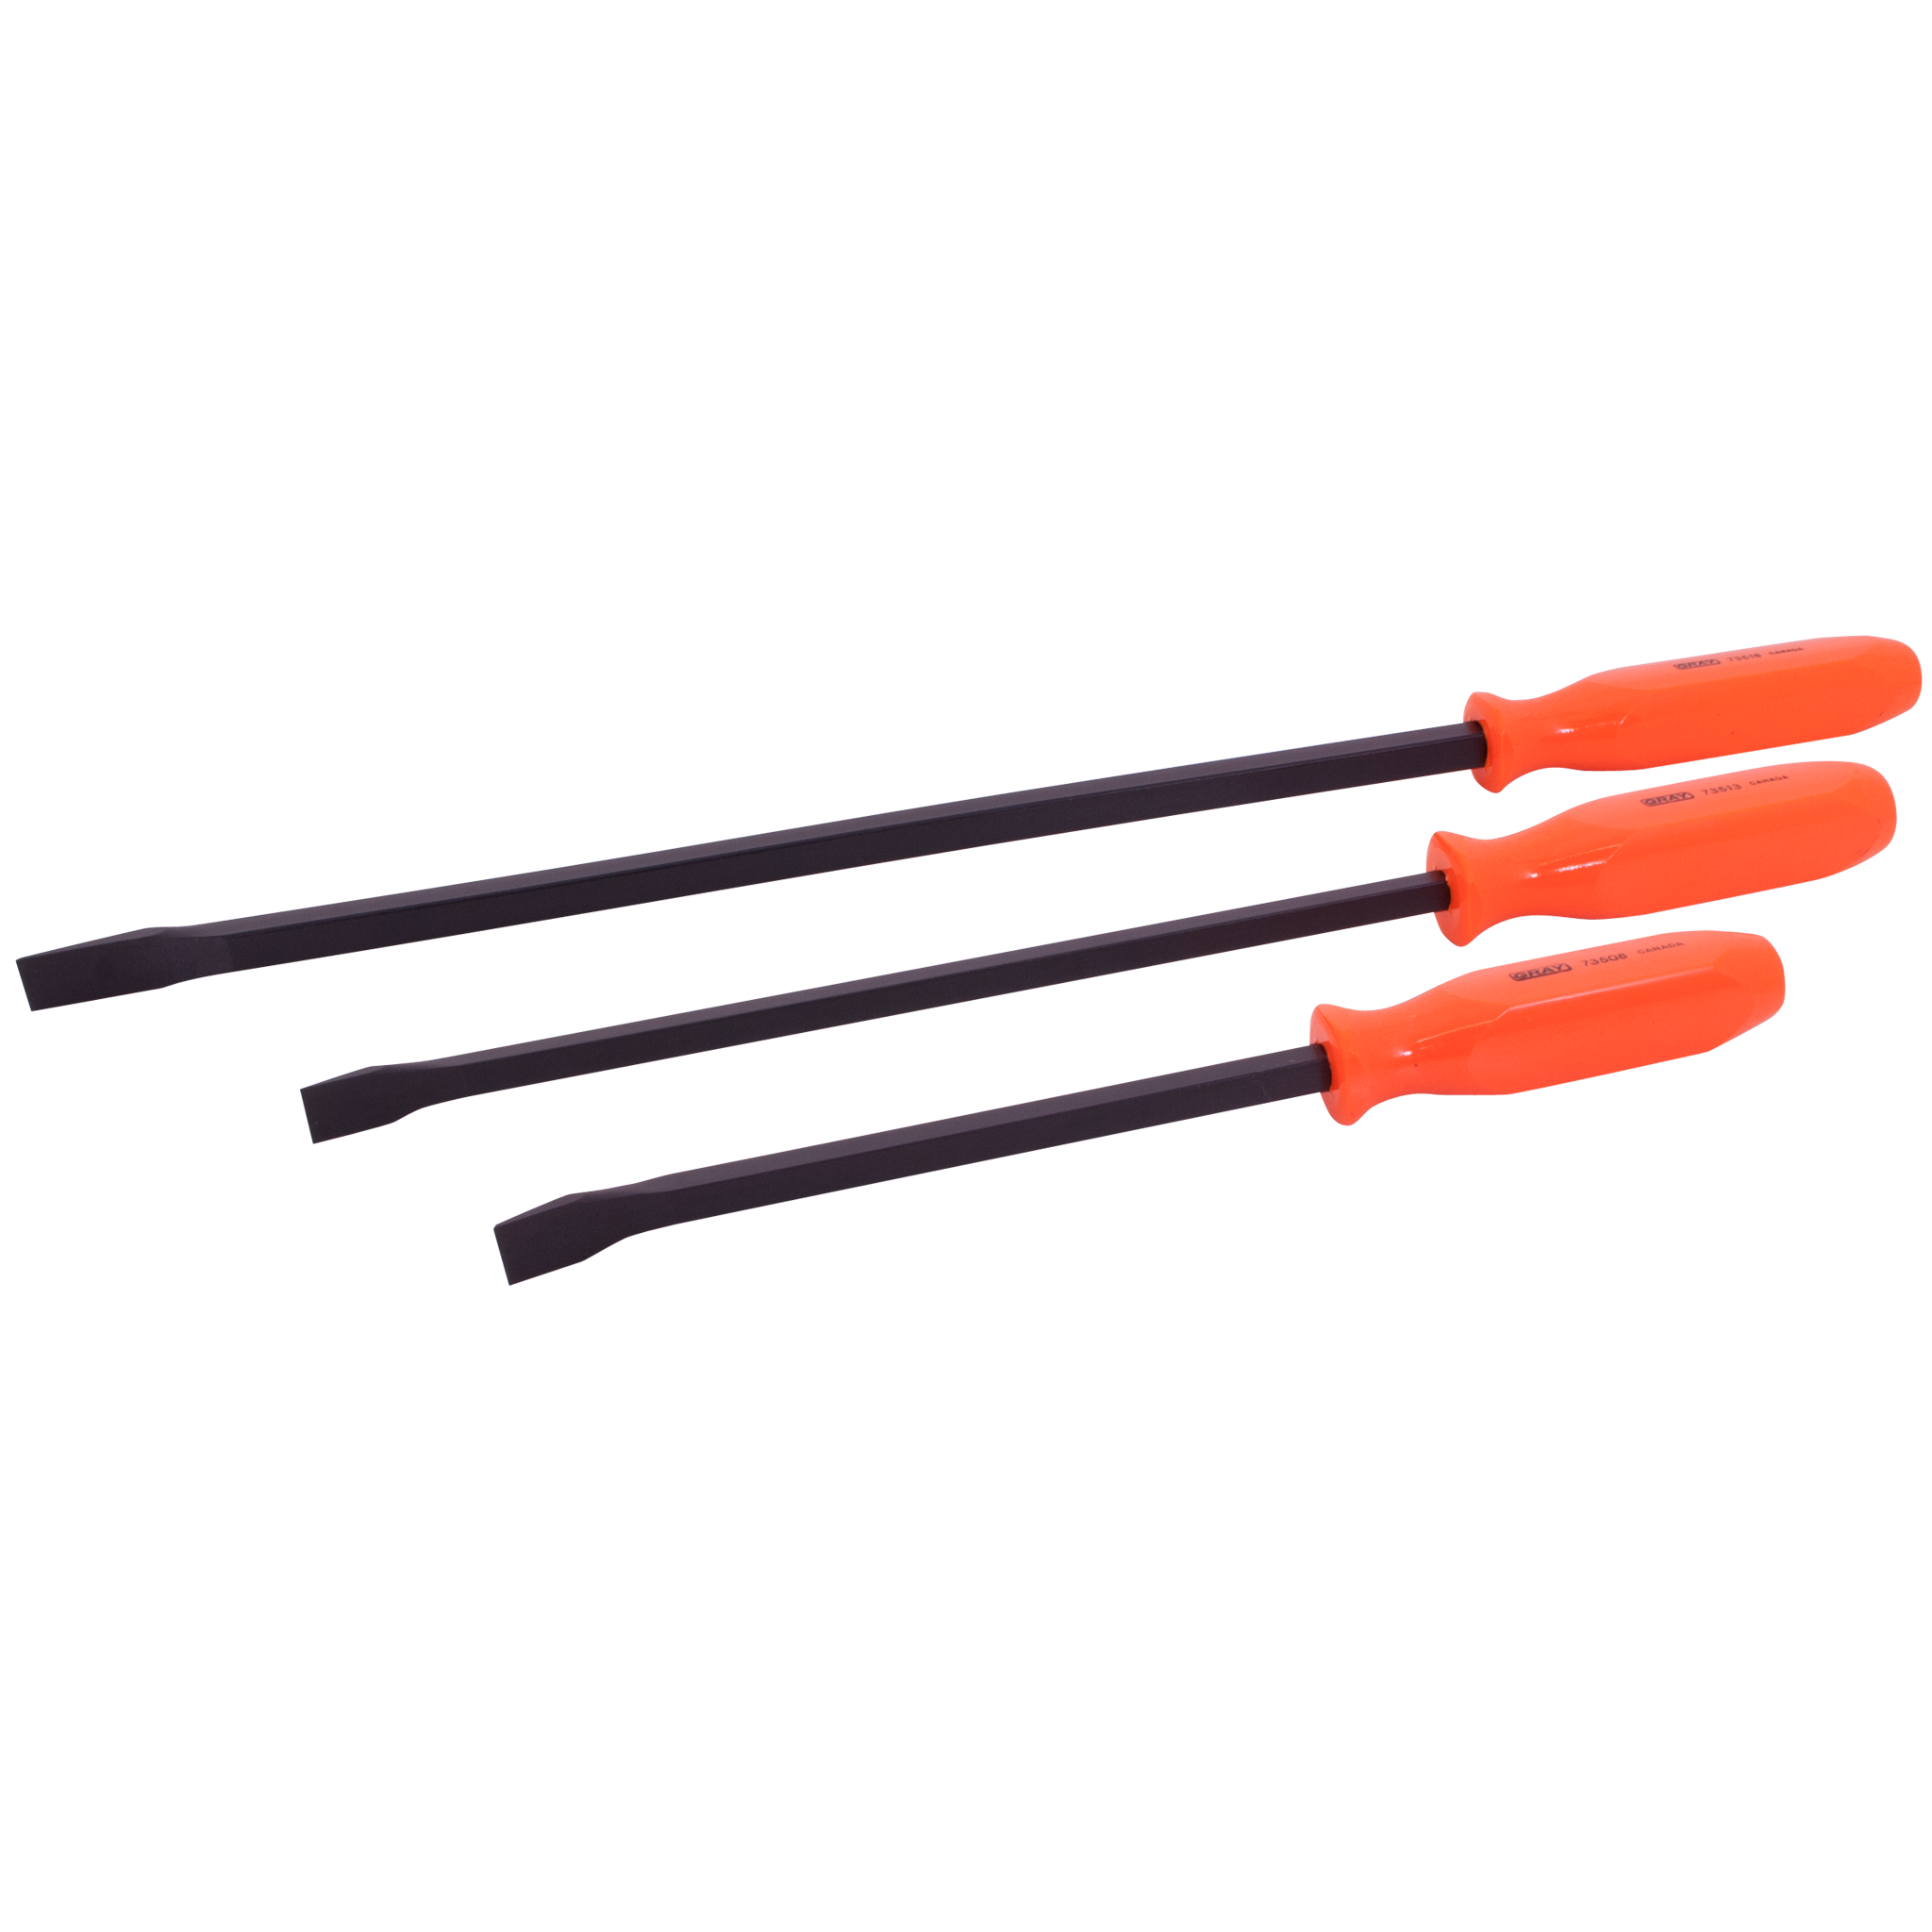 3 Piece Florescent Orange Handled Pry Bar Set with Black Oxide Blades